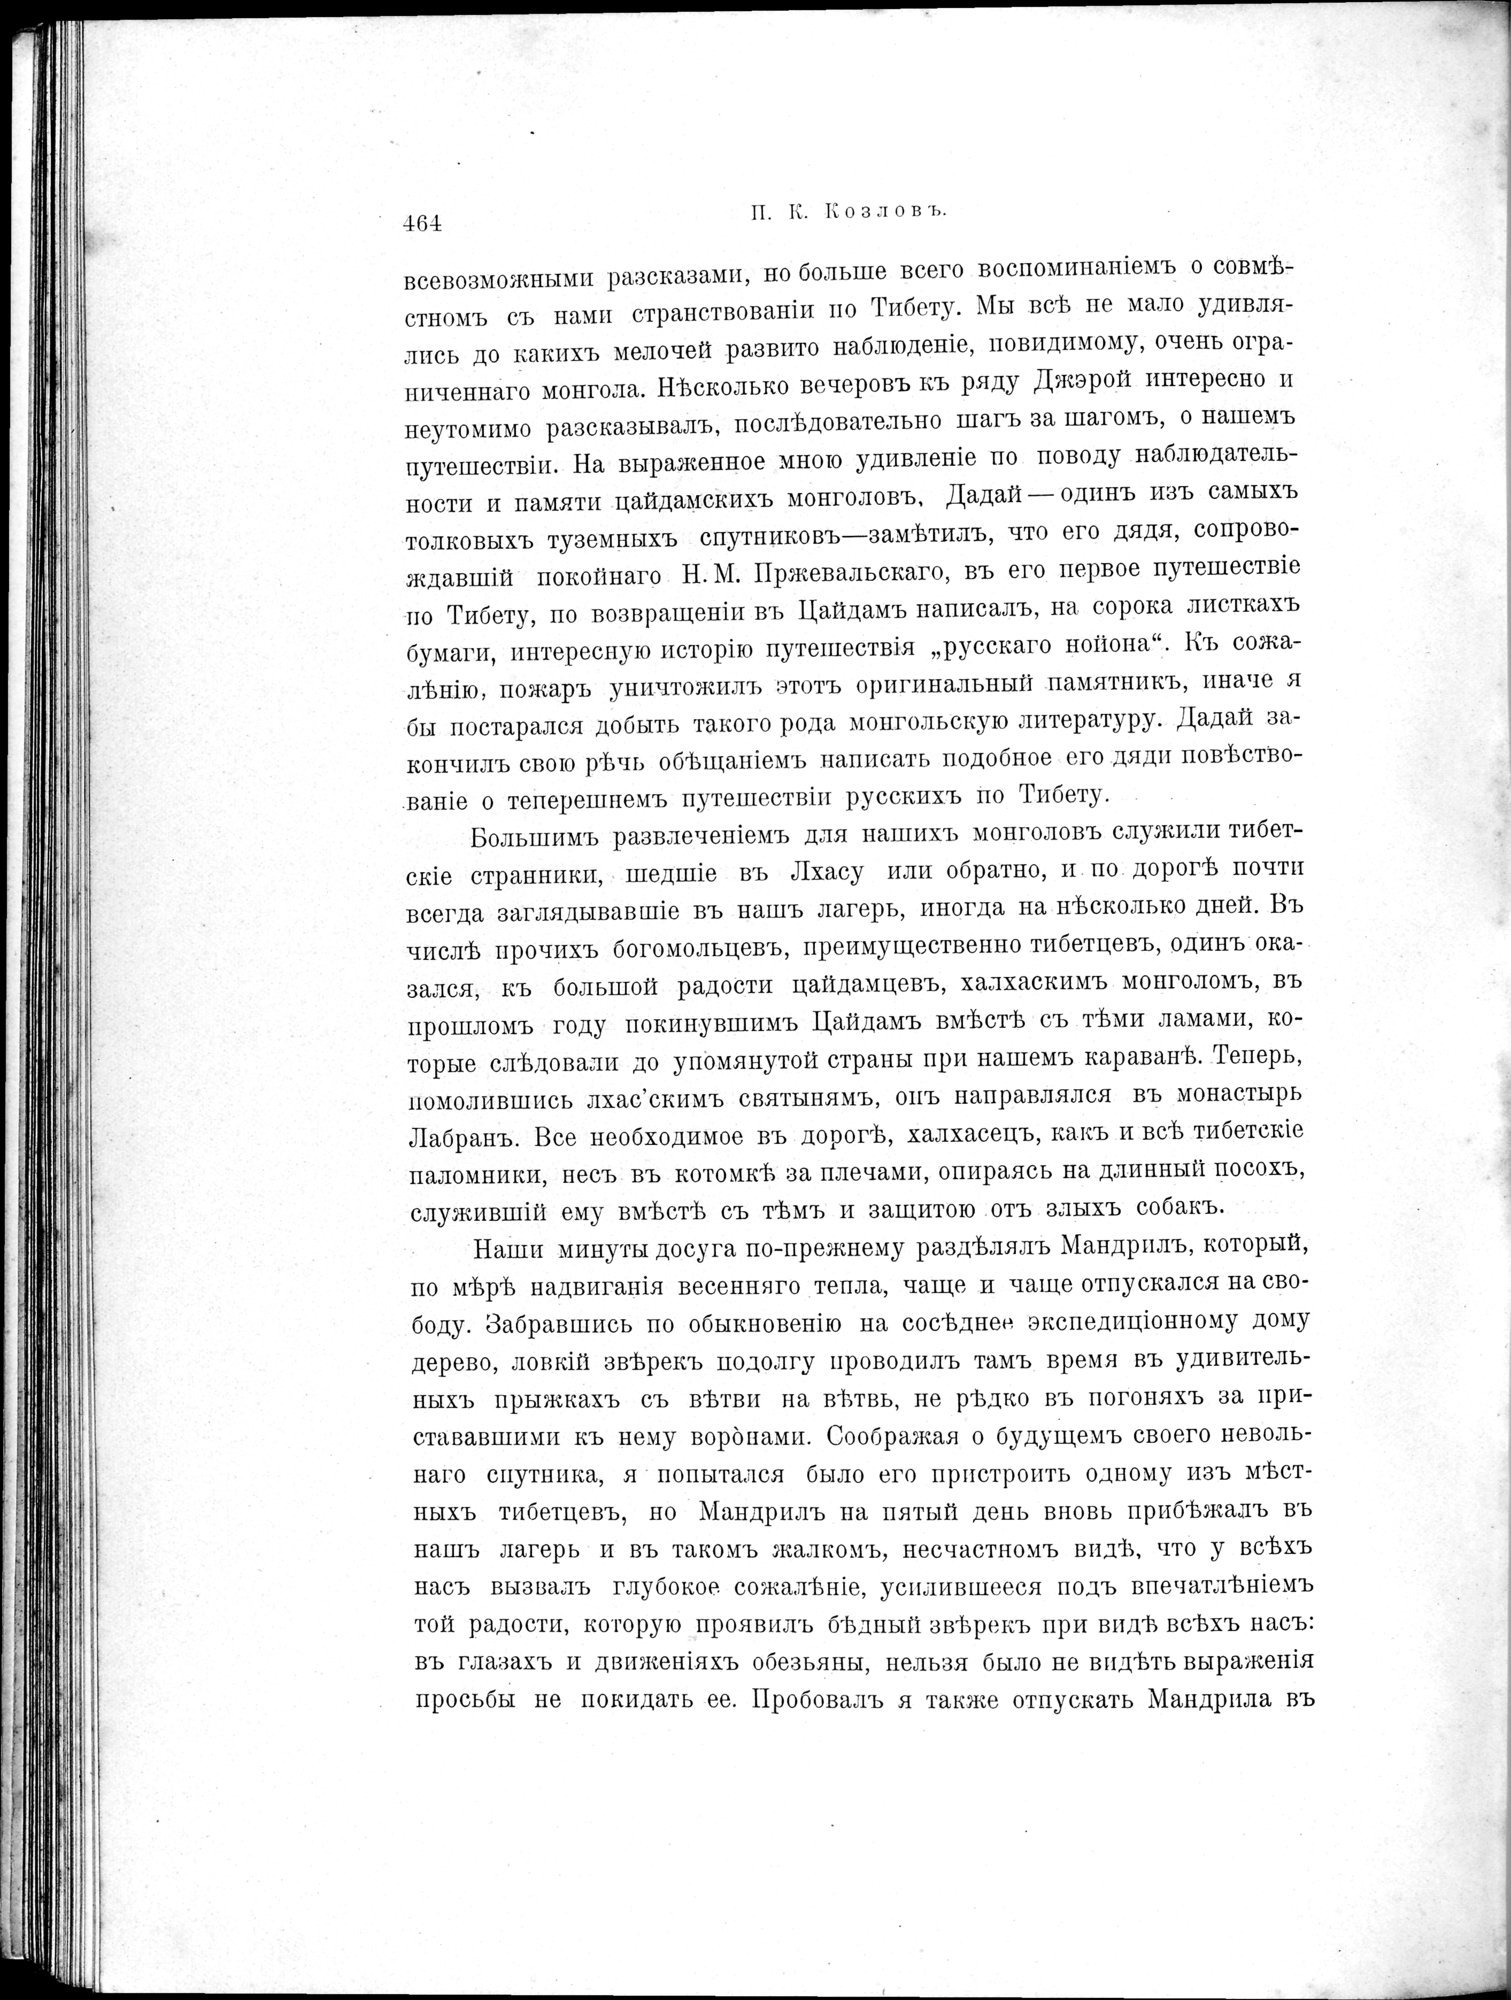 Mongoliia i Kam : vol.2 / Page 268 (Grayscale High Resolution Image)